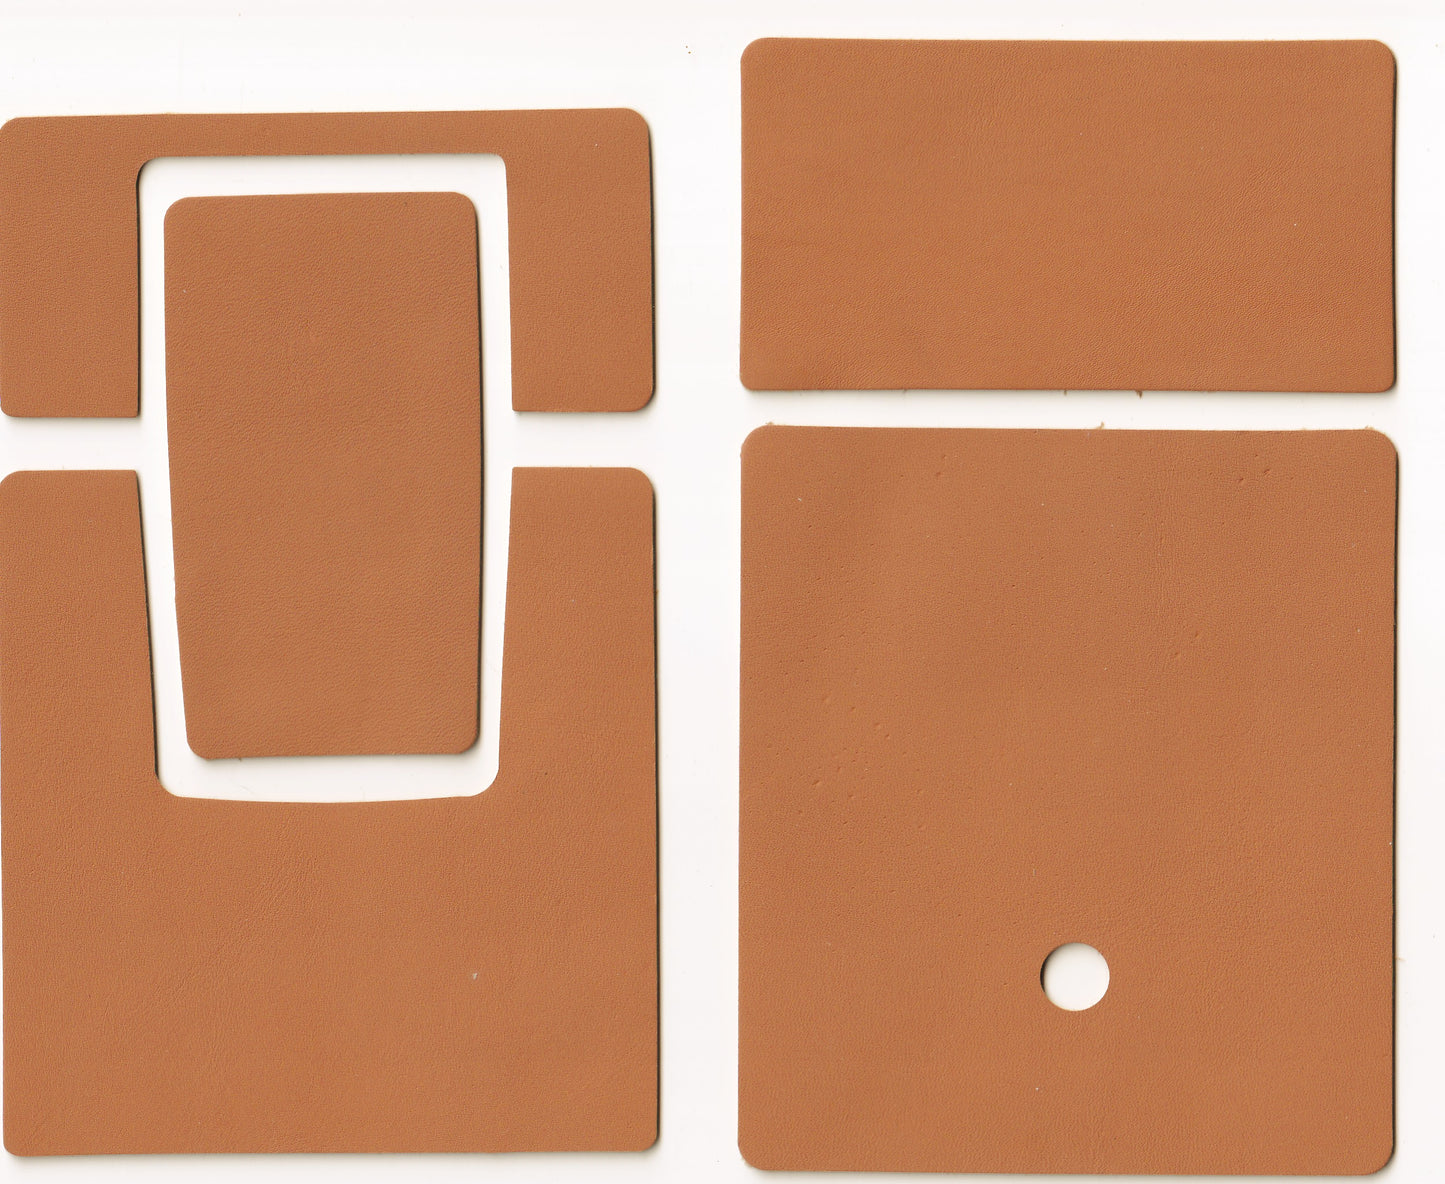 Polaroid sx70/sonar/680/690 camera skin Replacement Cover-Genuine Leather